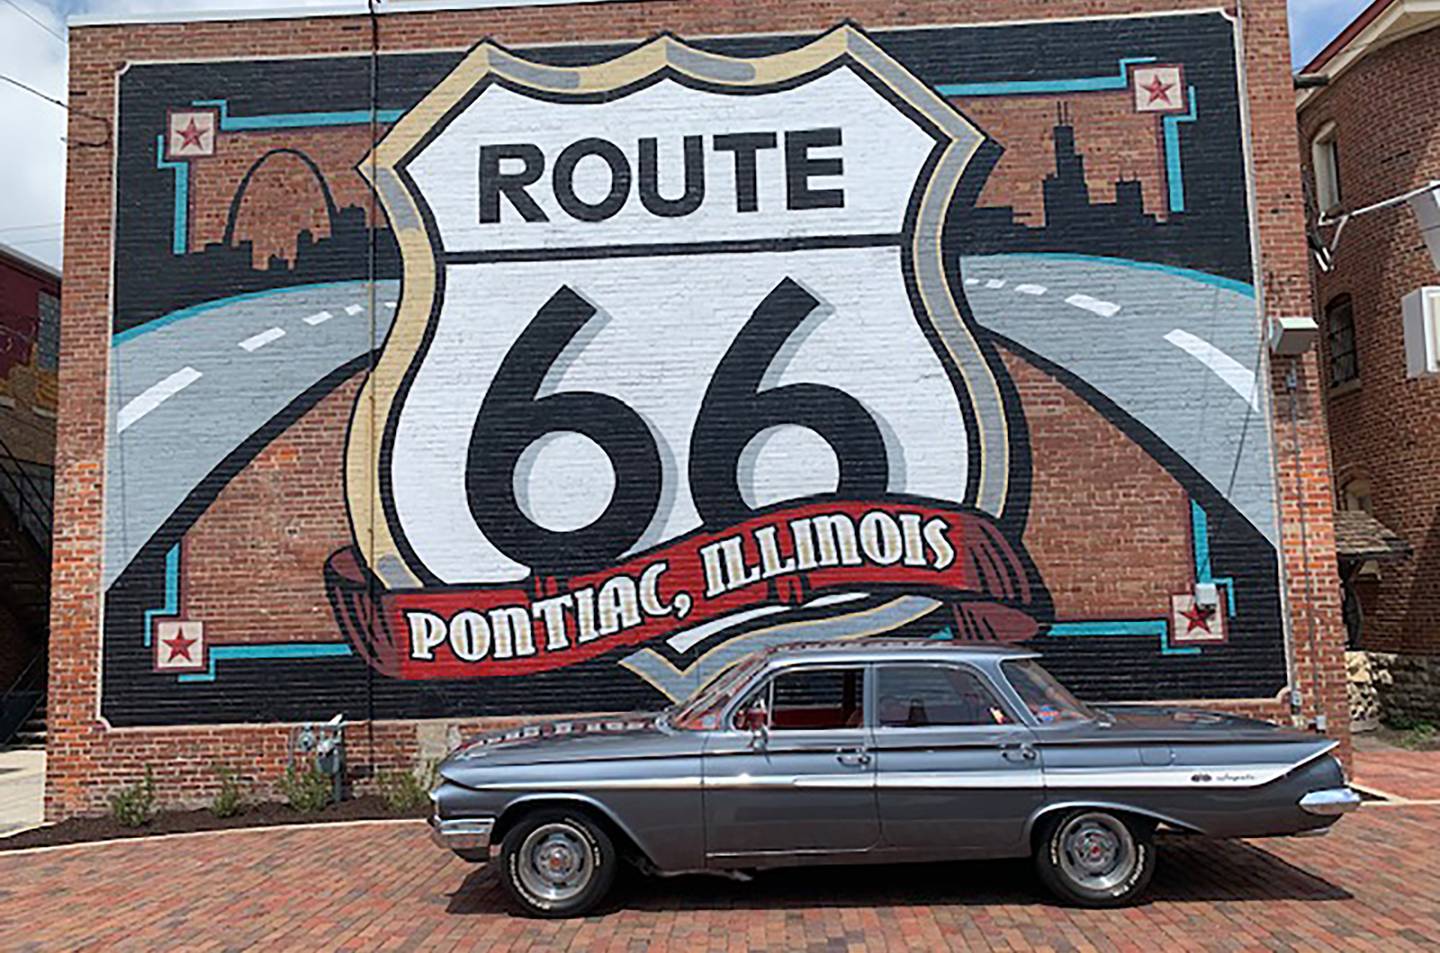 Photos by Rudy Host, Jr. - 1961 Impala Route 66